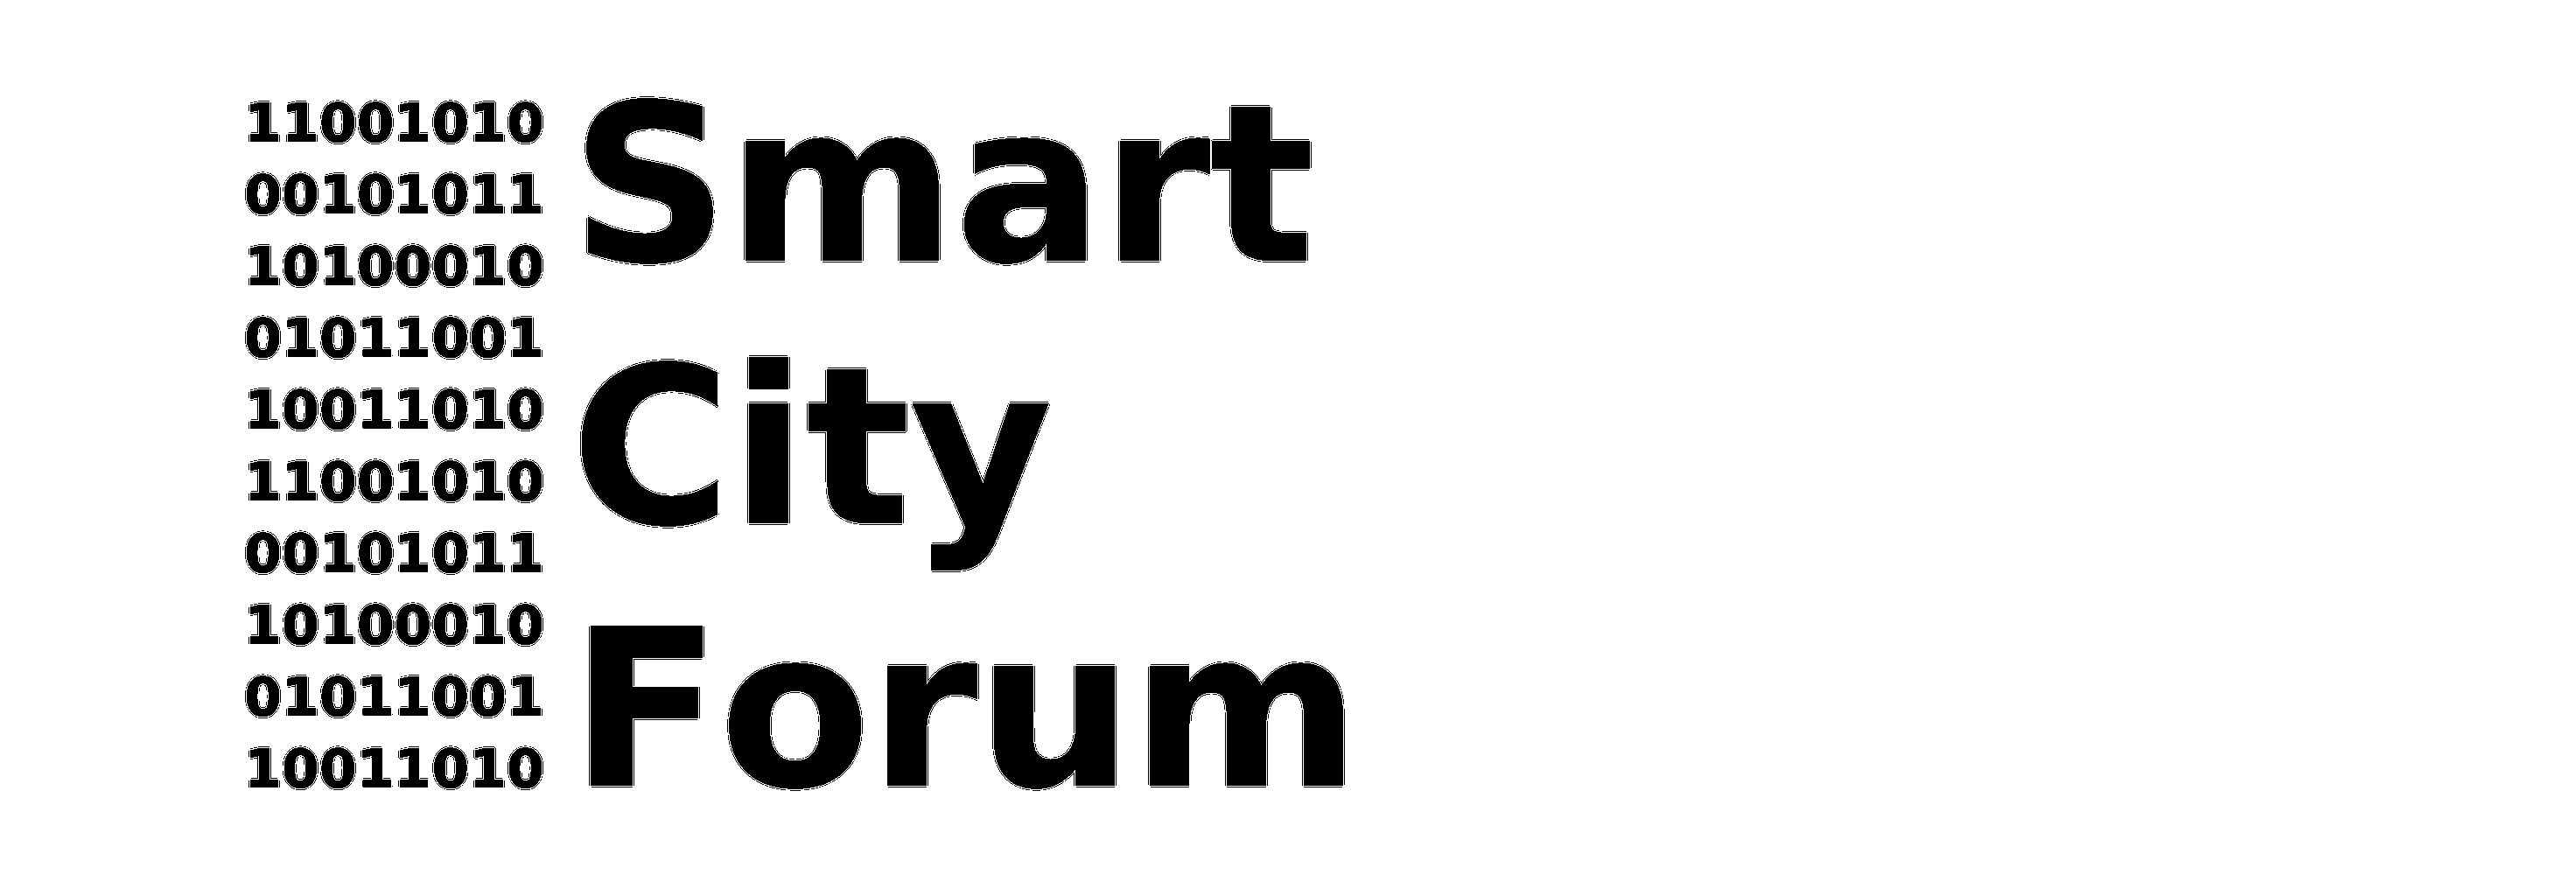 Smartcity Forum 2020